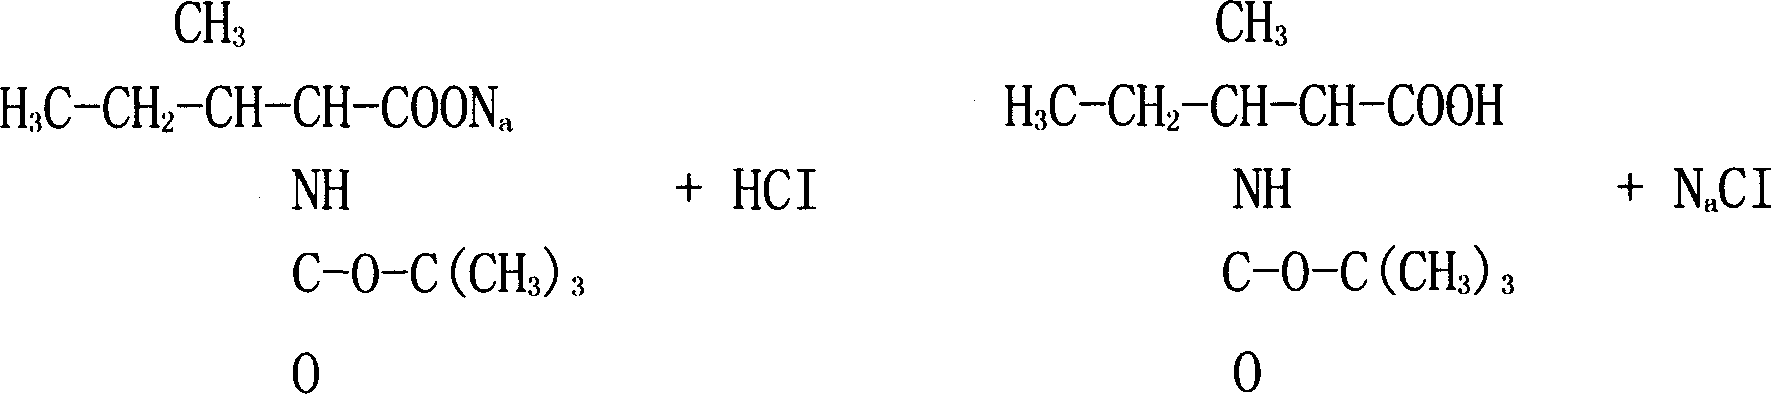 Method for synthesizing N-tert-butoxy-oxo-L-isoleucine